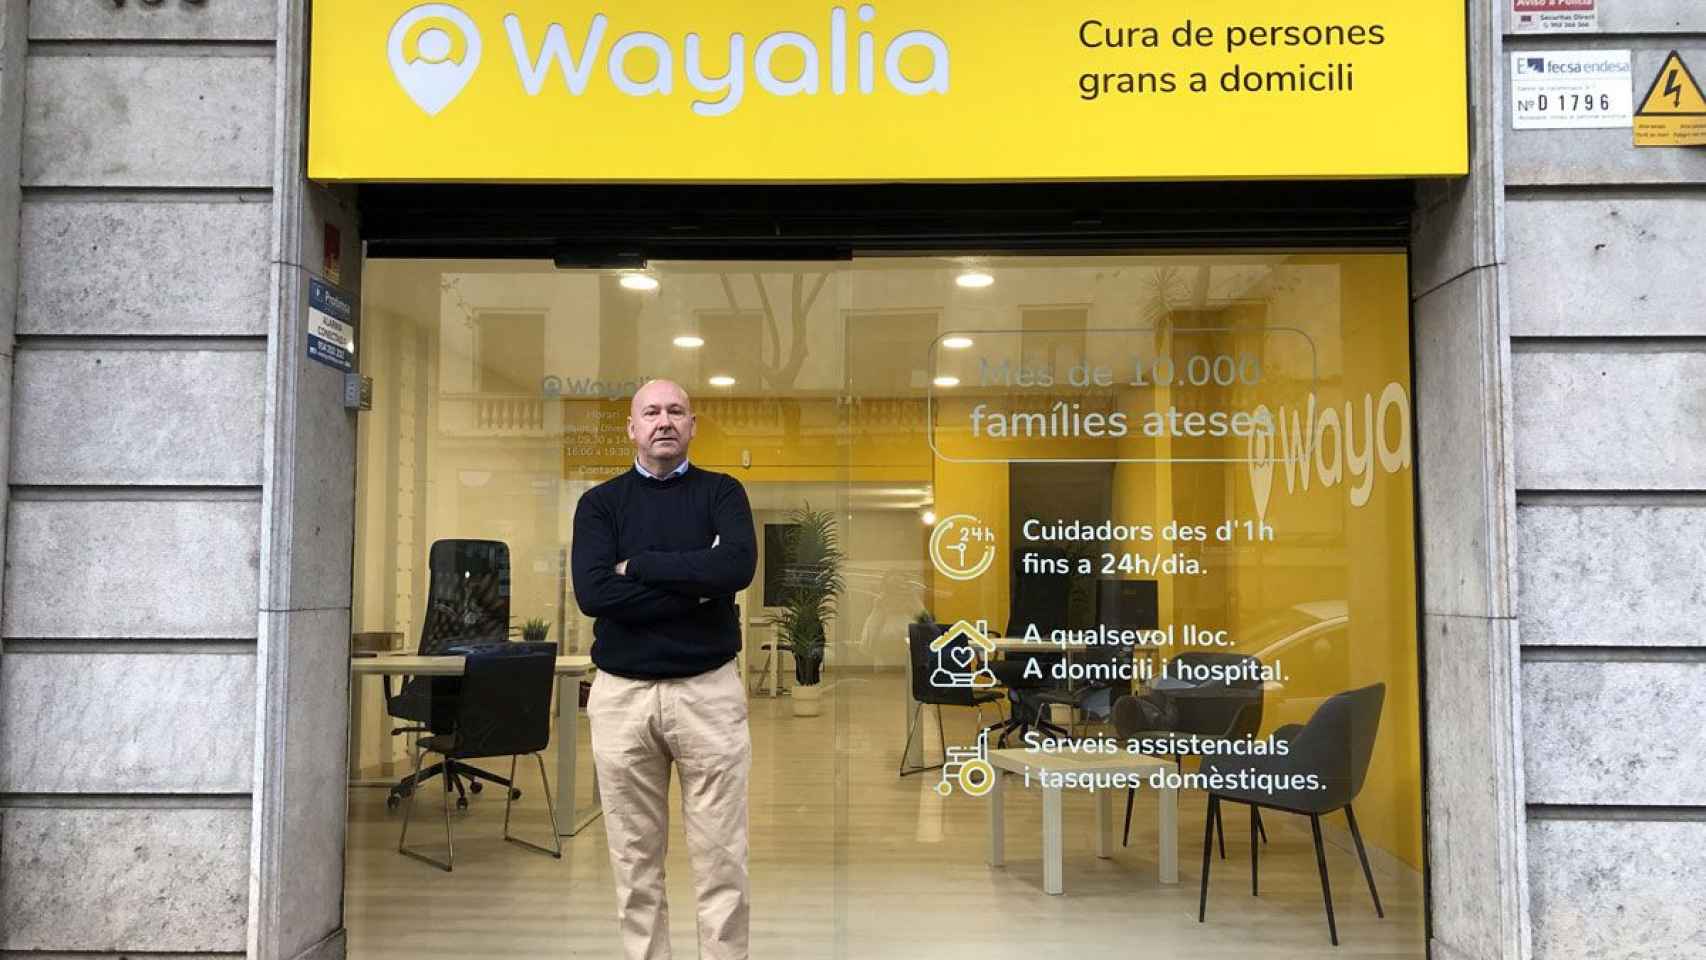 Local de Wayalia / CEDIDA